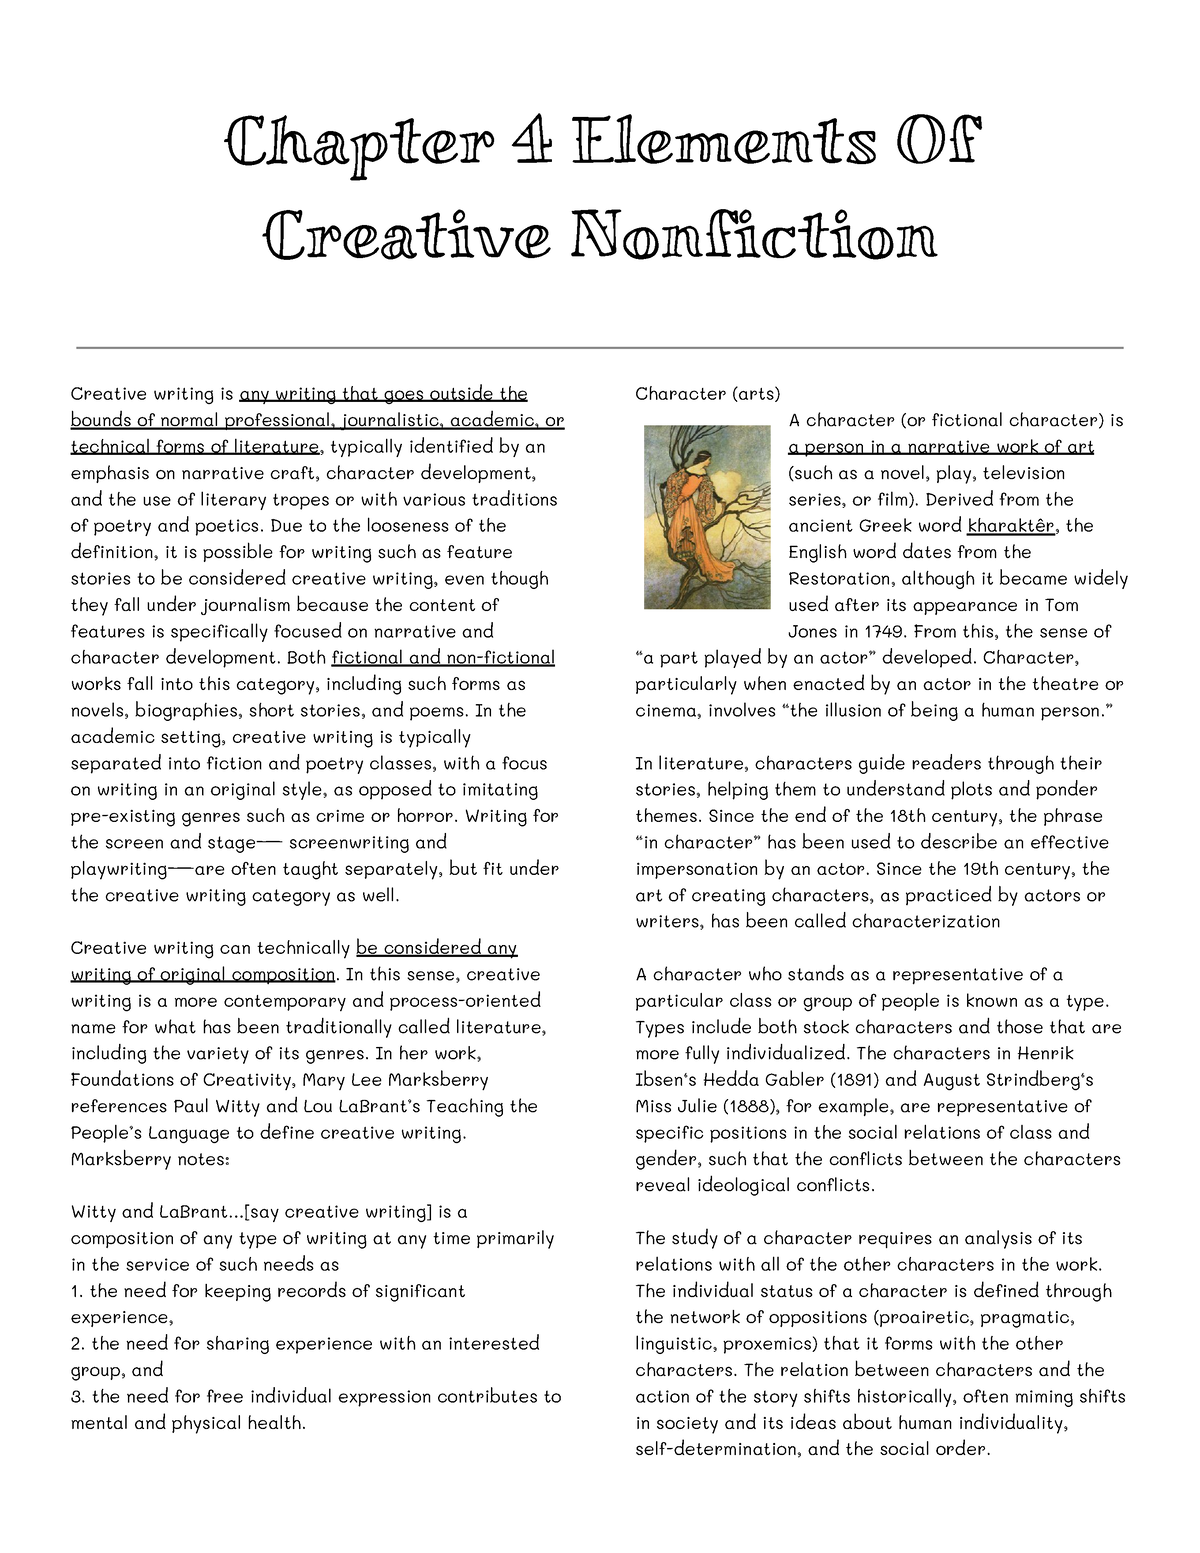 personal essay creative nonfiction example